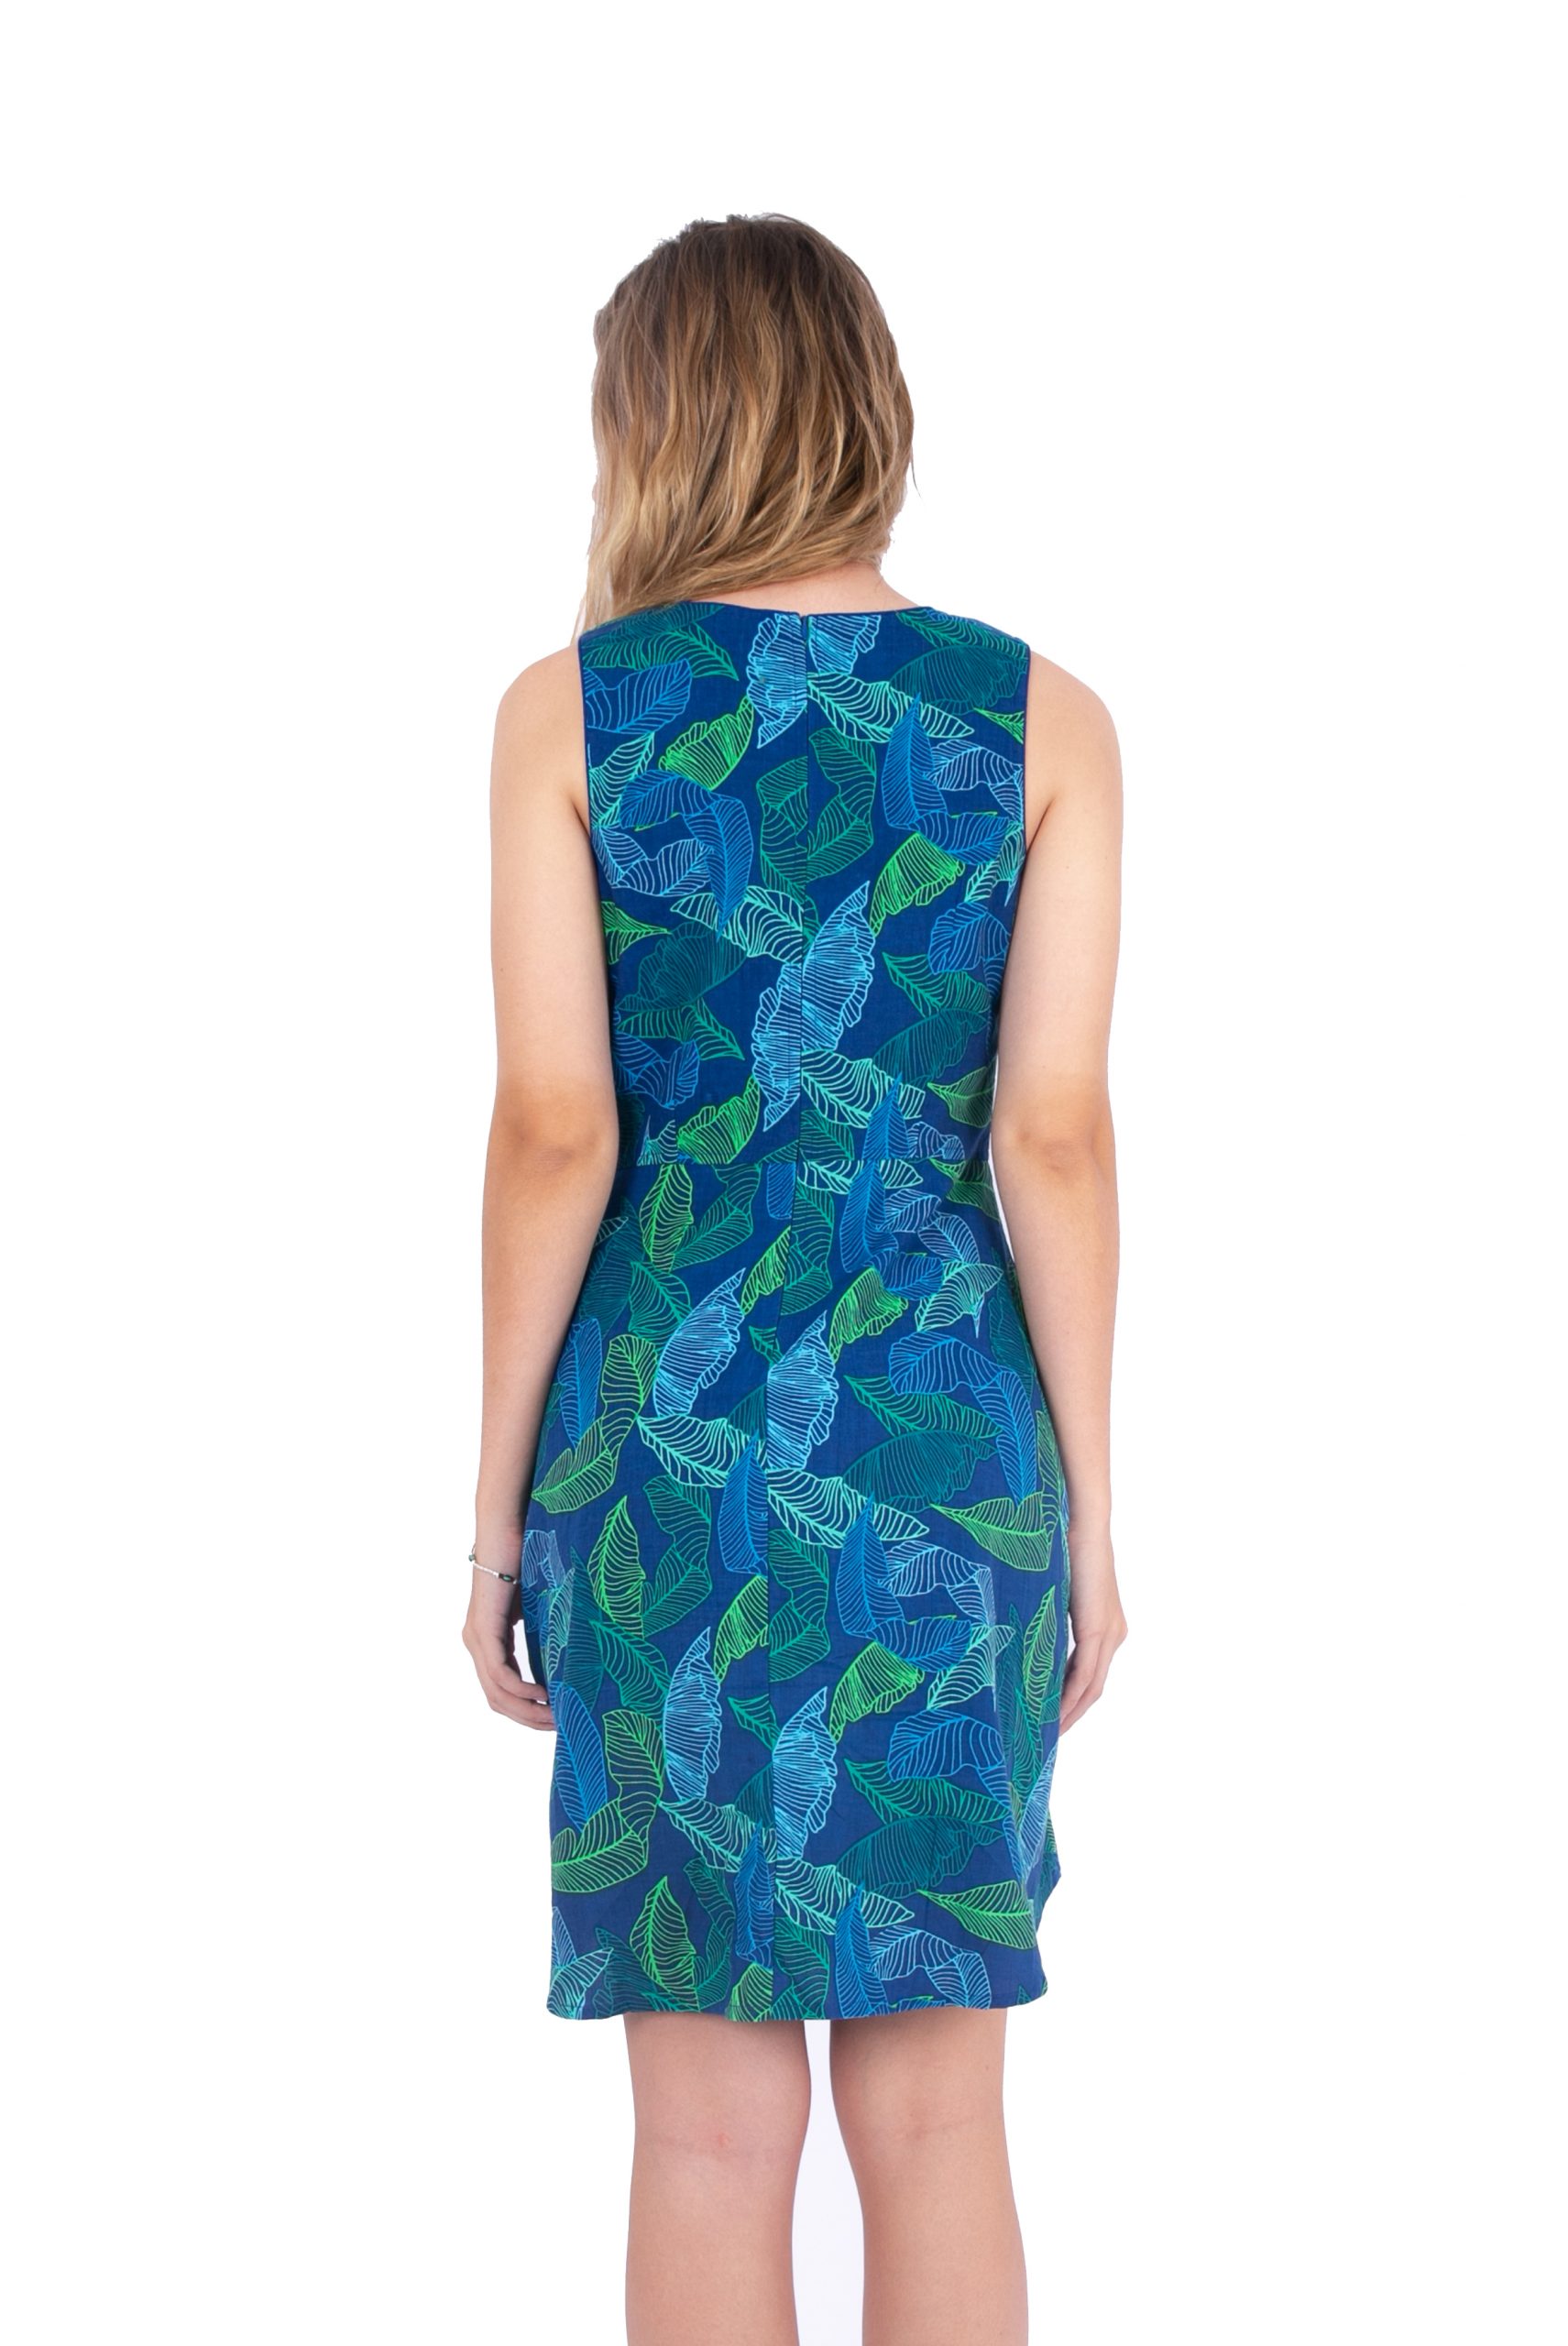 Sydney Dress - Blue Leaf - OM Designs